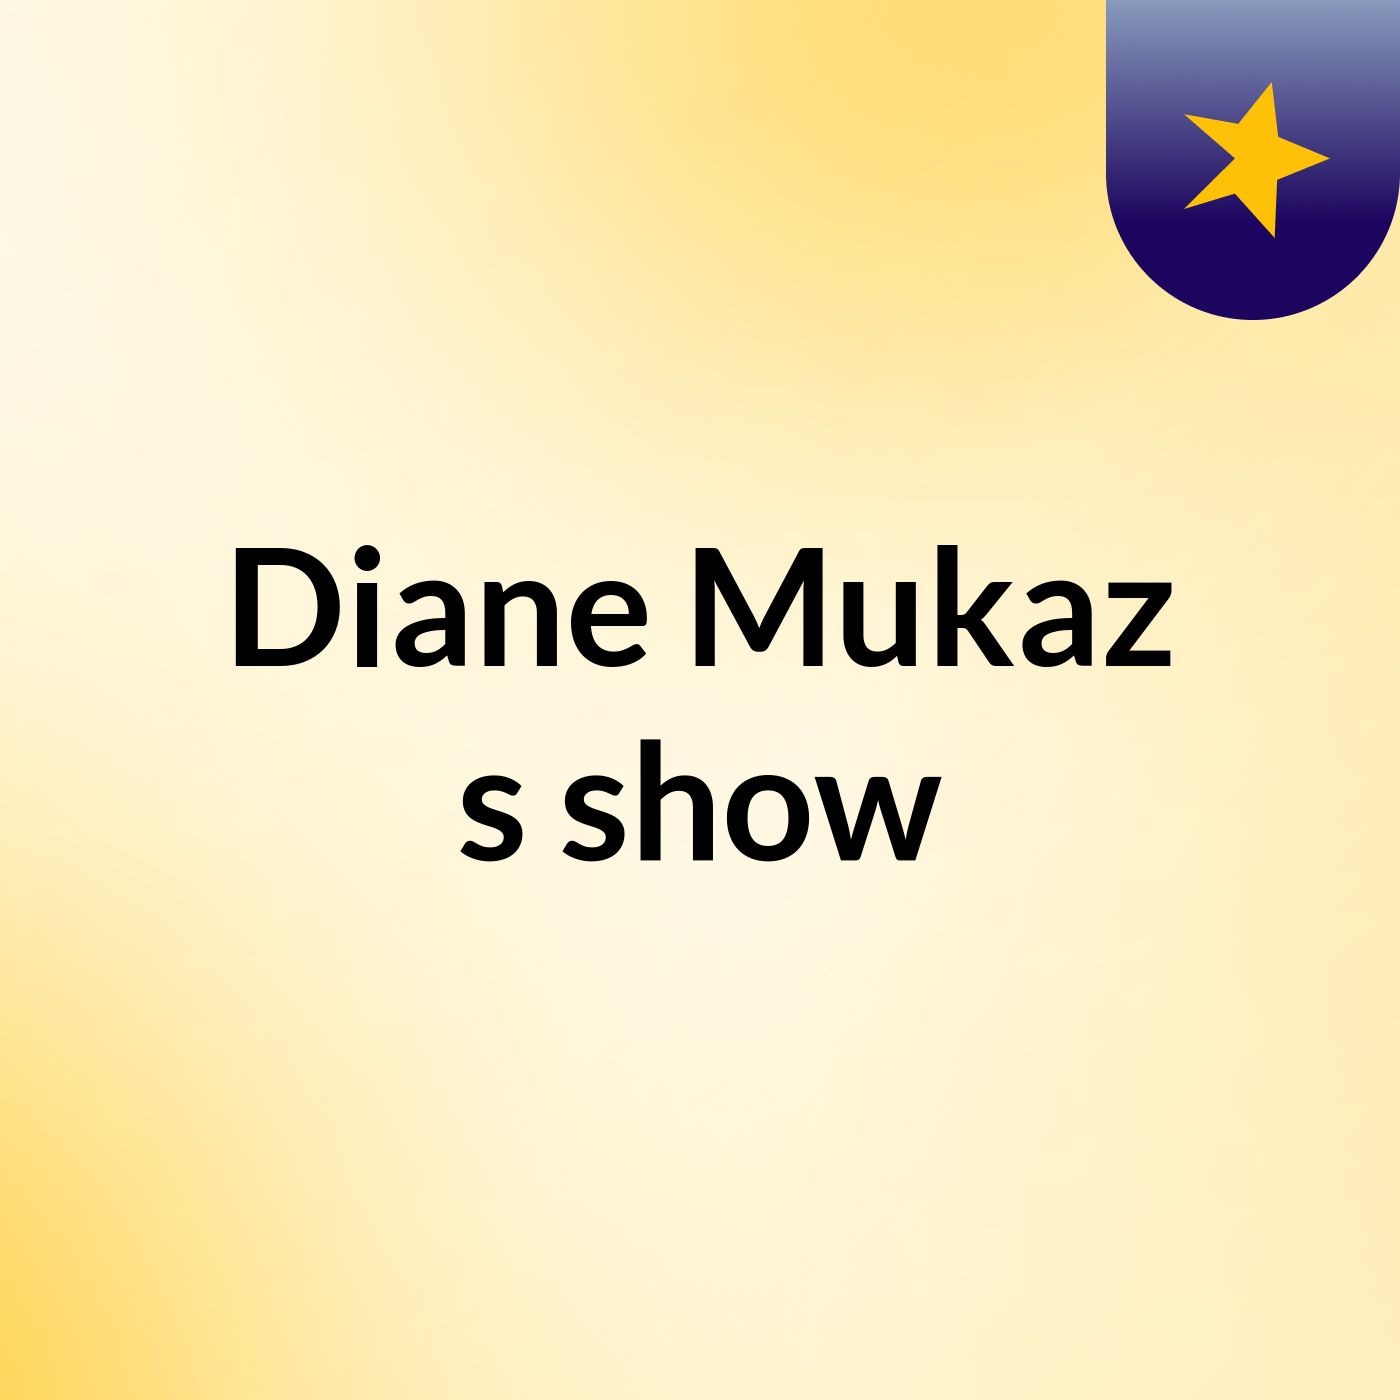 Diane Mukaz's show